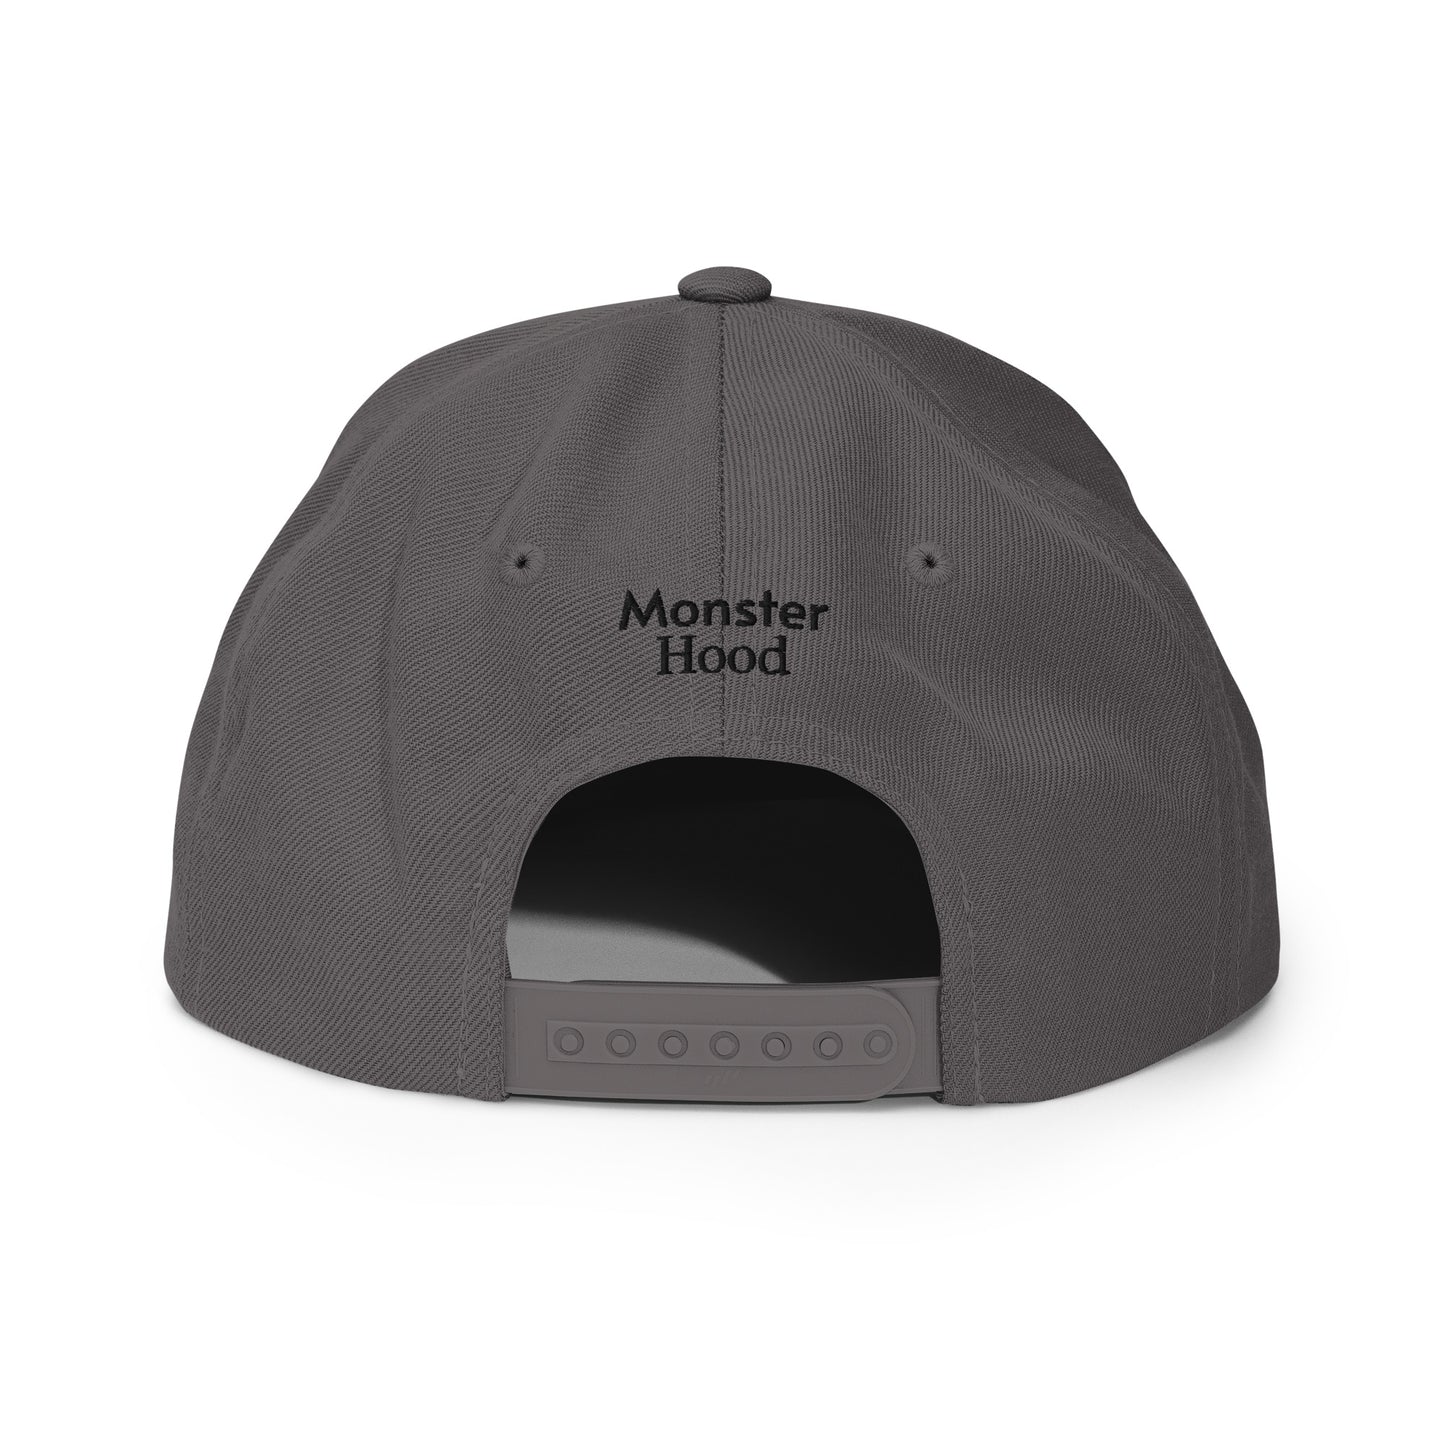 Hood Original - Snapback Black M logo Solid color